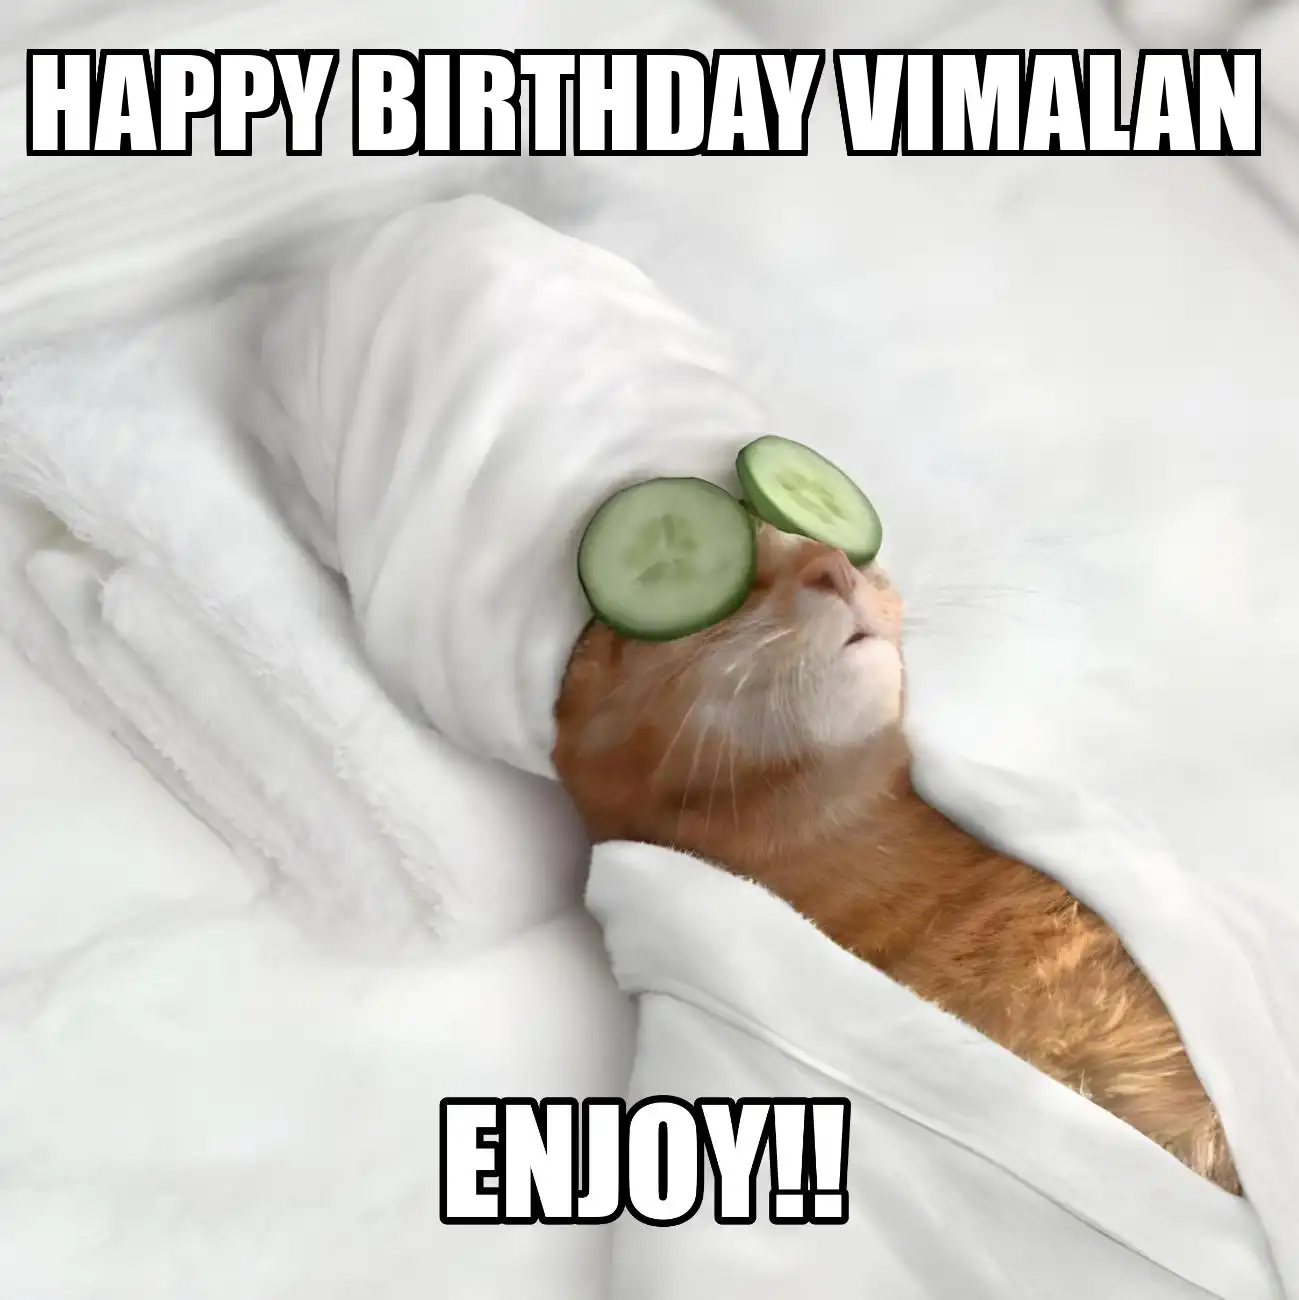 Happy Birthday Vimalan Enjoy Cat Meme